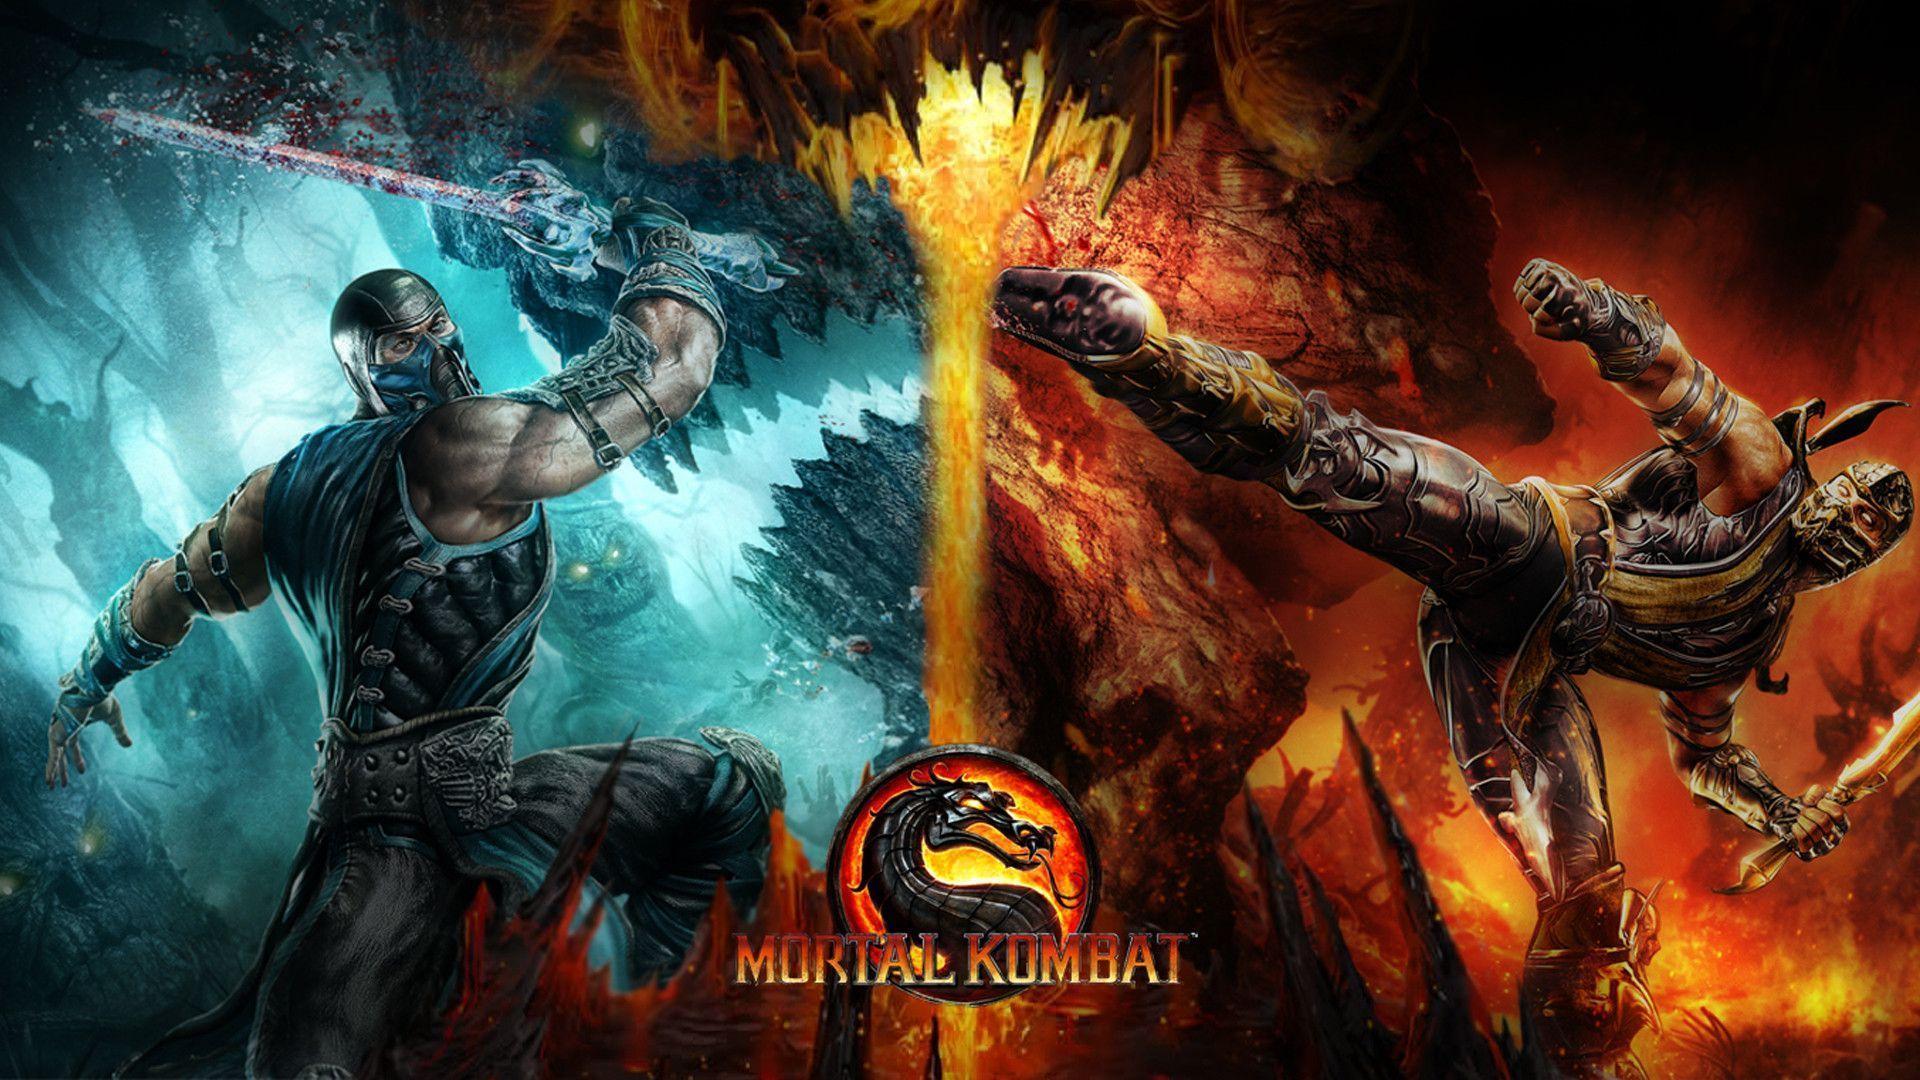 Mortal Kombat Scorpion Vs Sub Zero in Games